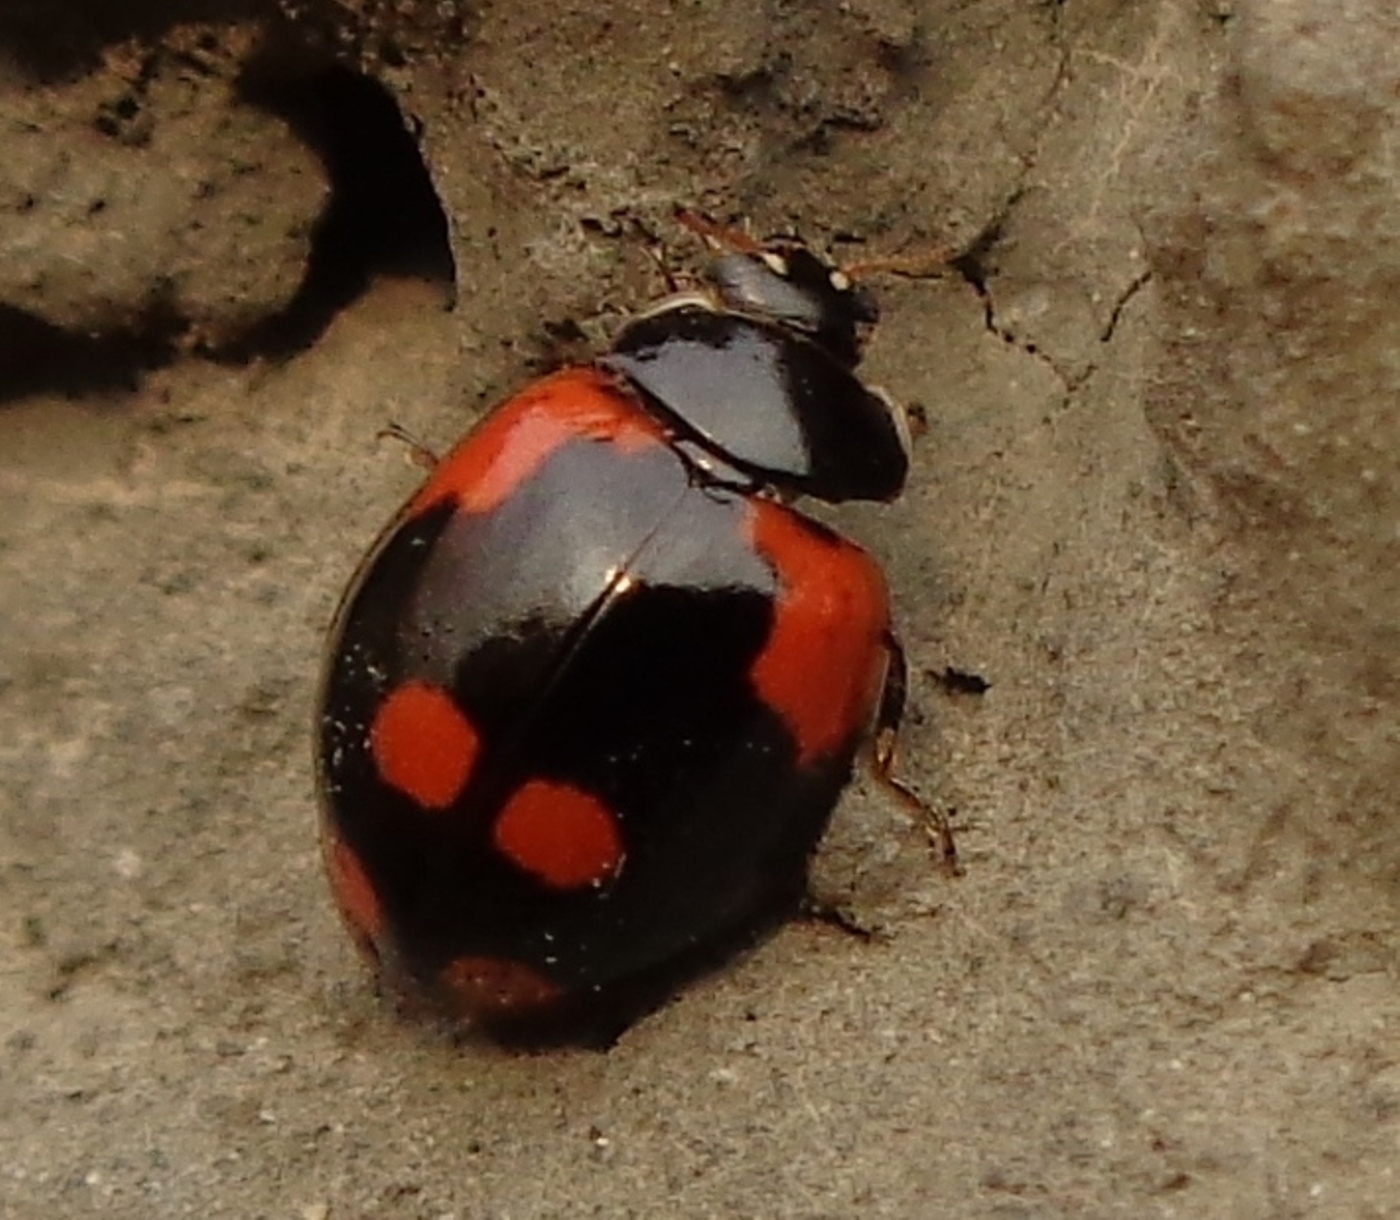 Ladybird Chetyrohpyatnisty ekzohomus (Exochomus quadripustulatus)